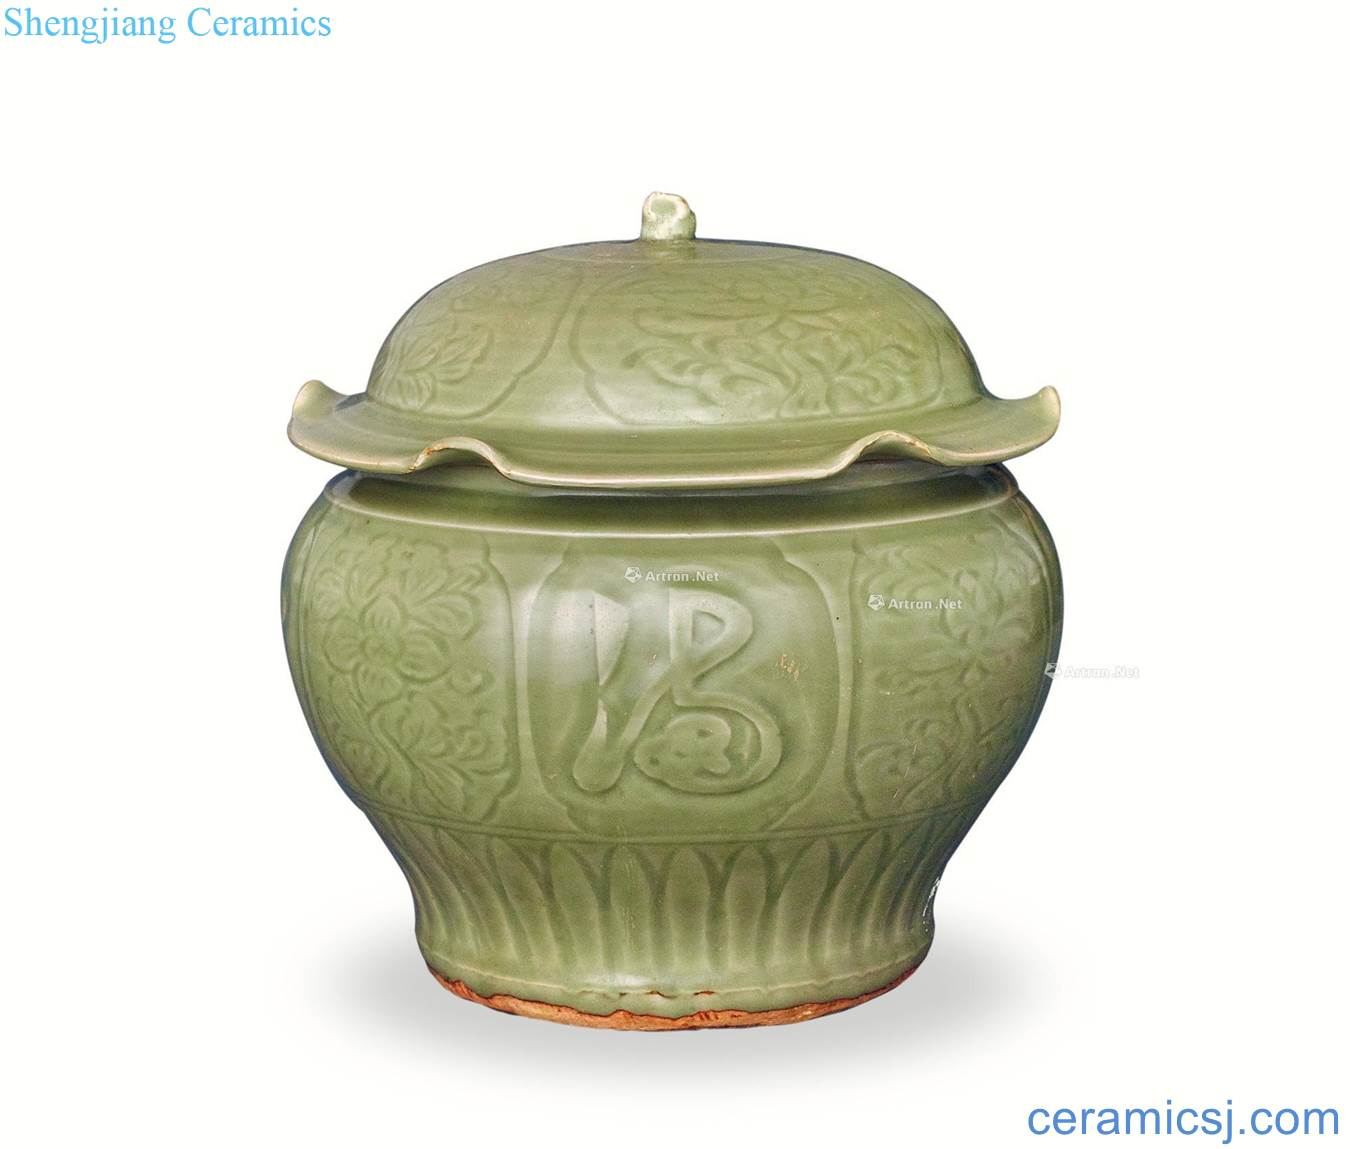 The yuan dynasty Longquan celadon wufu treasure lotus leaf cover tank